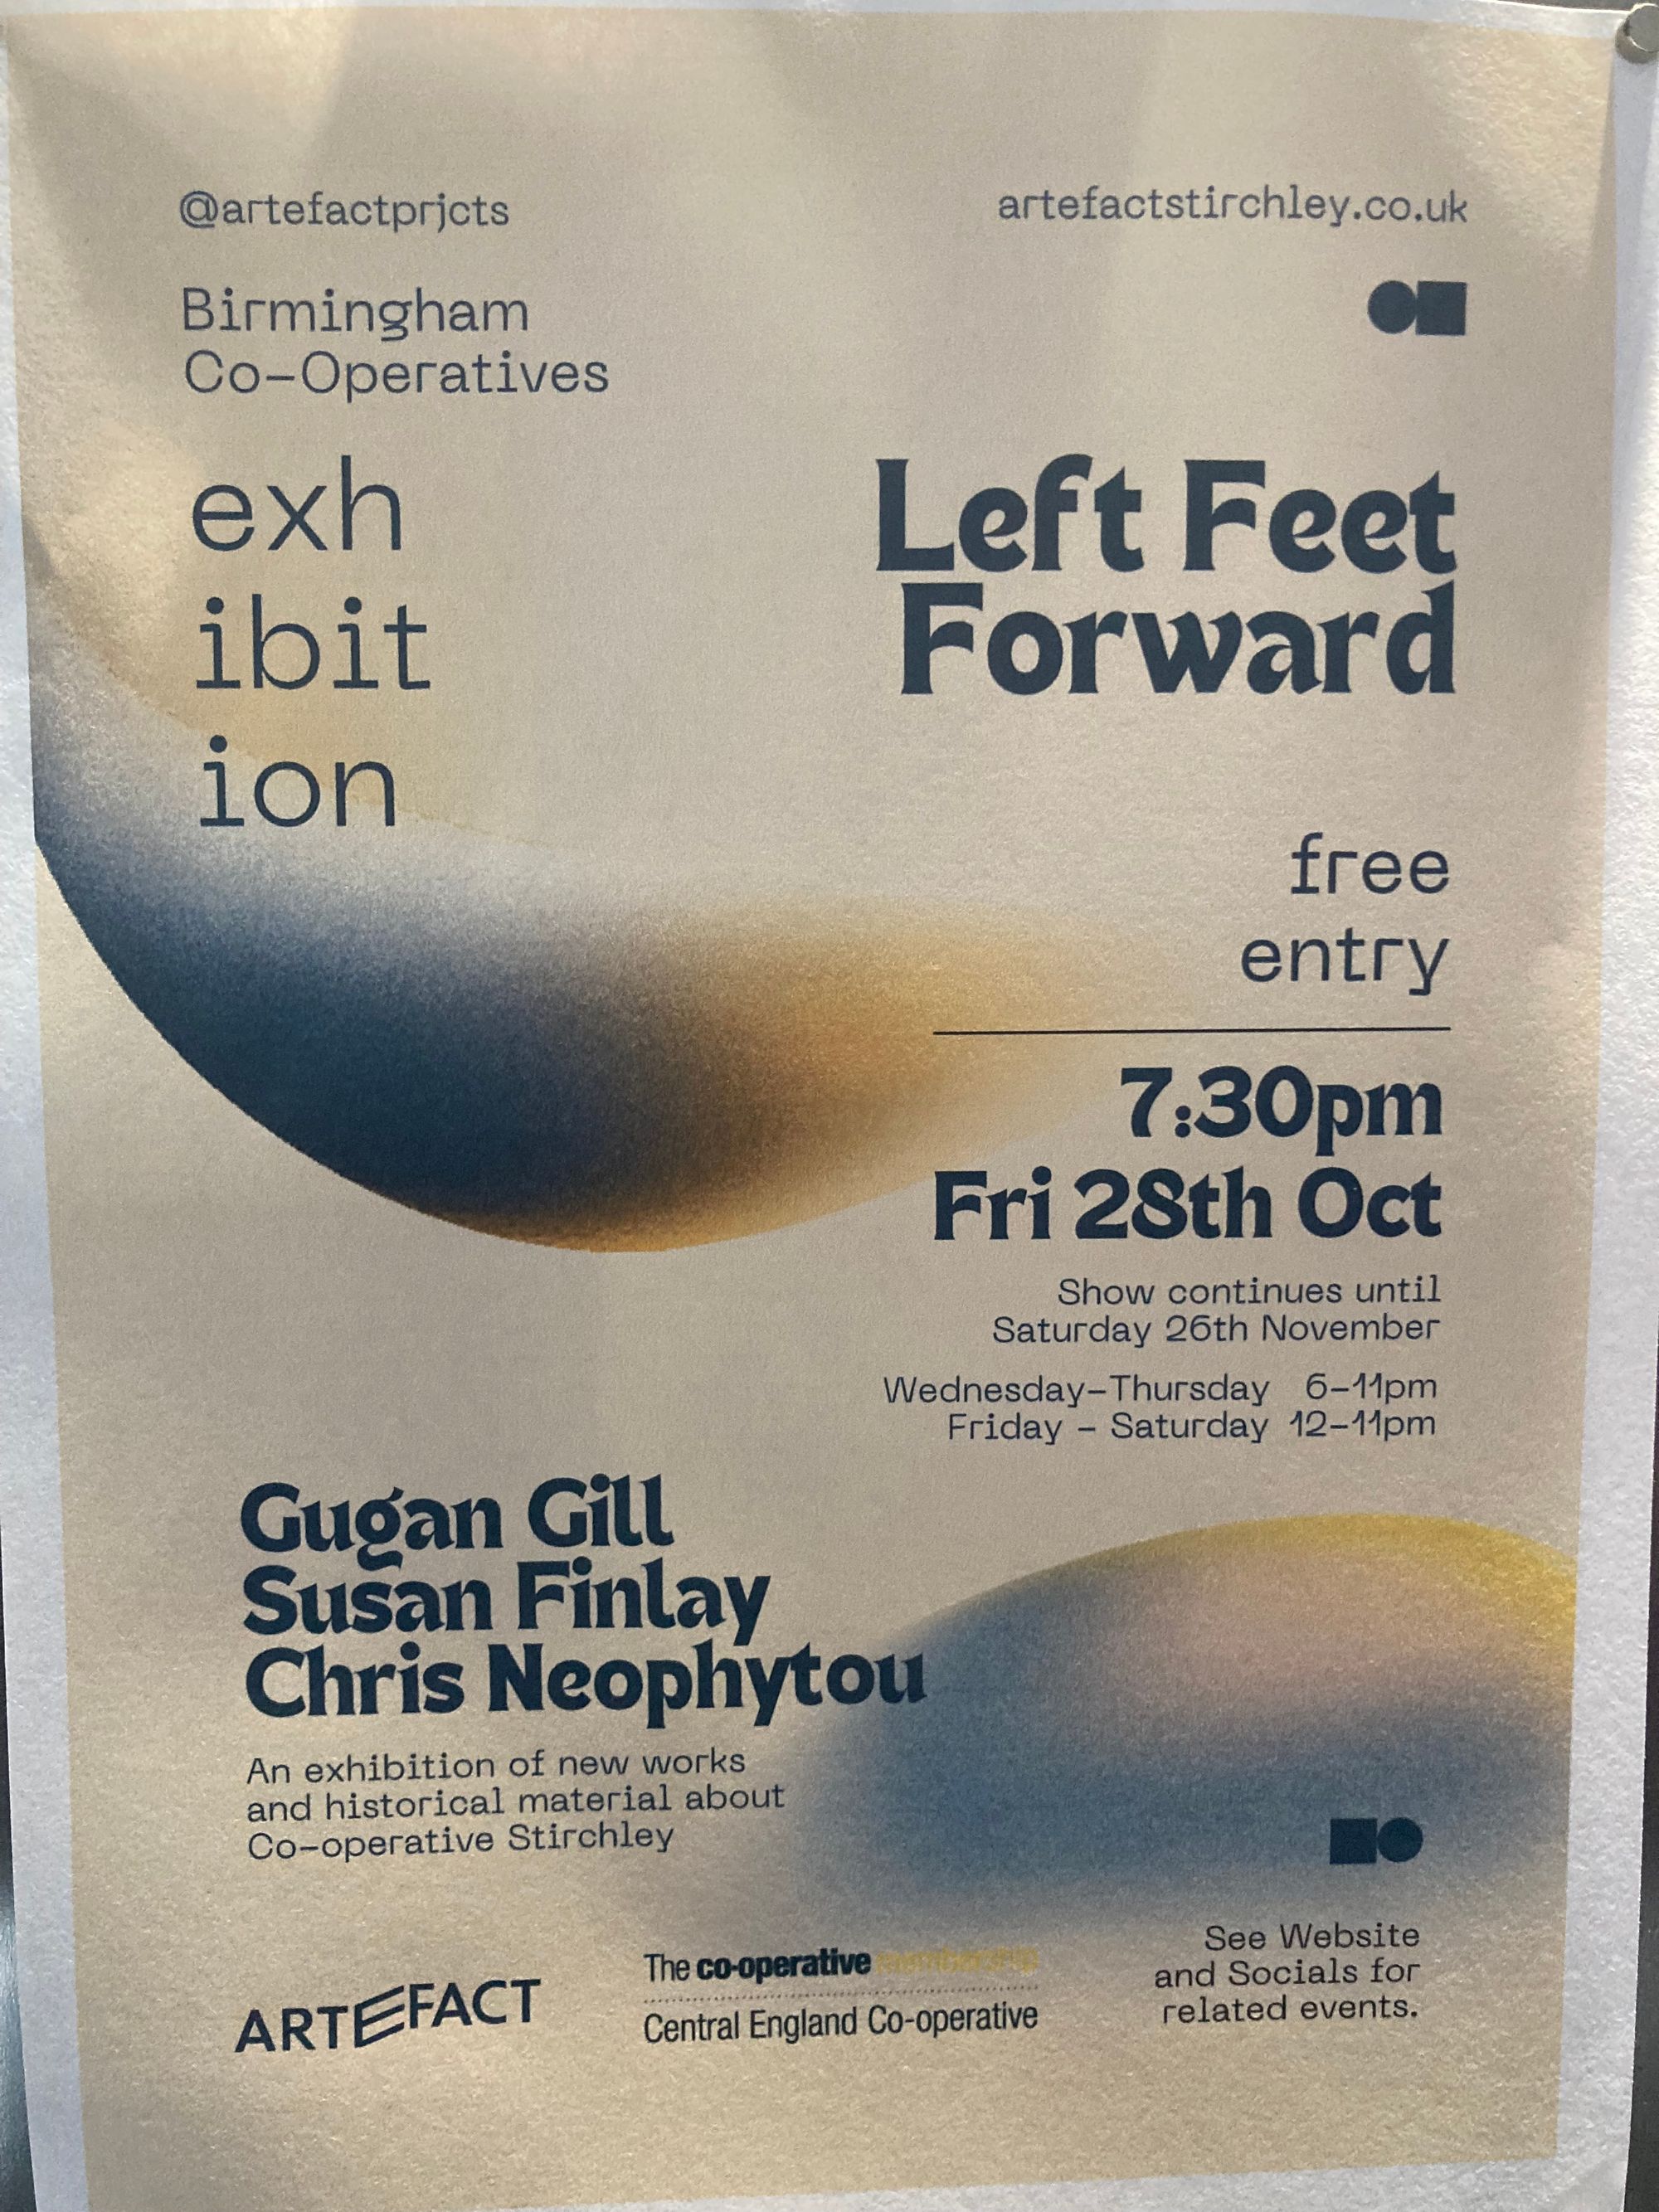 Birmingham Co-operatives present 'Left Feet Forward' Exhibition